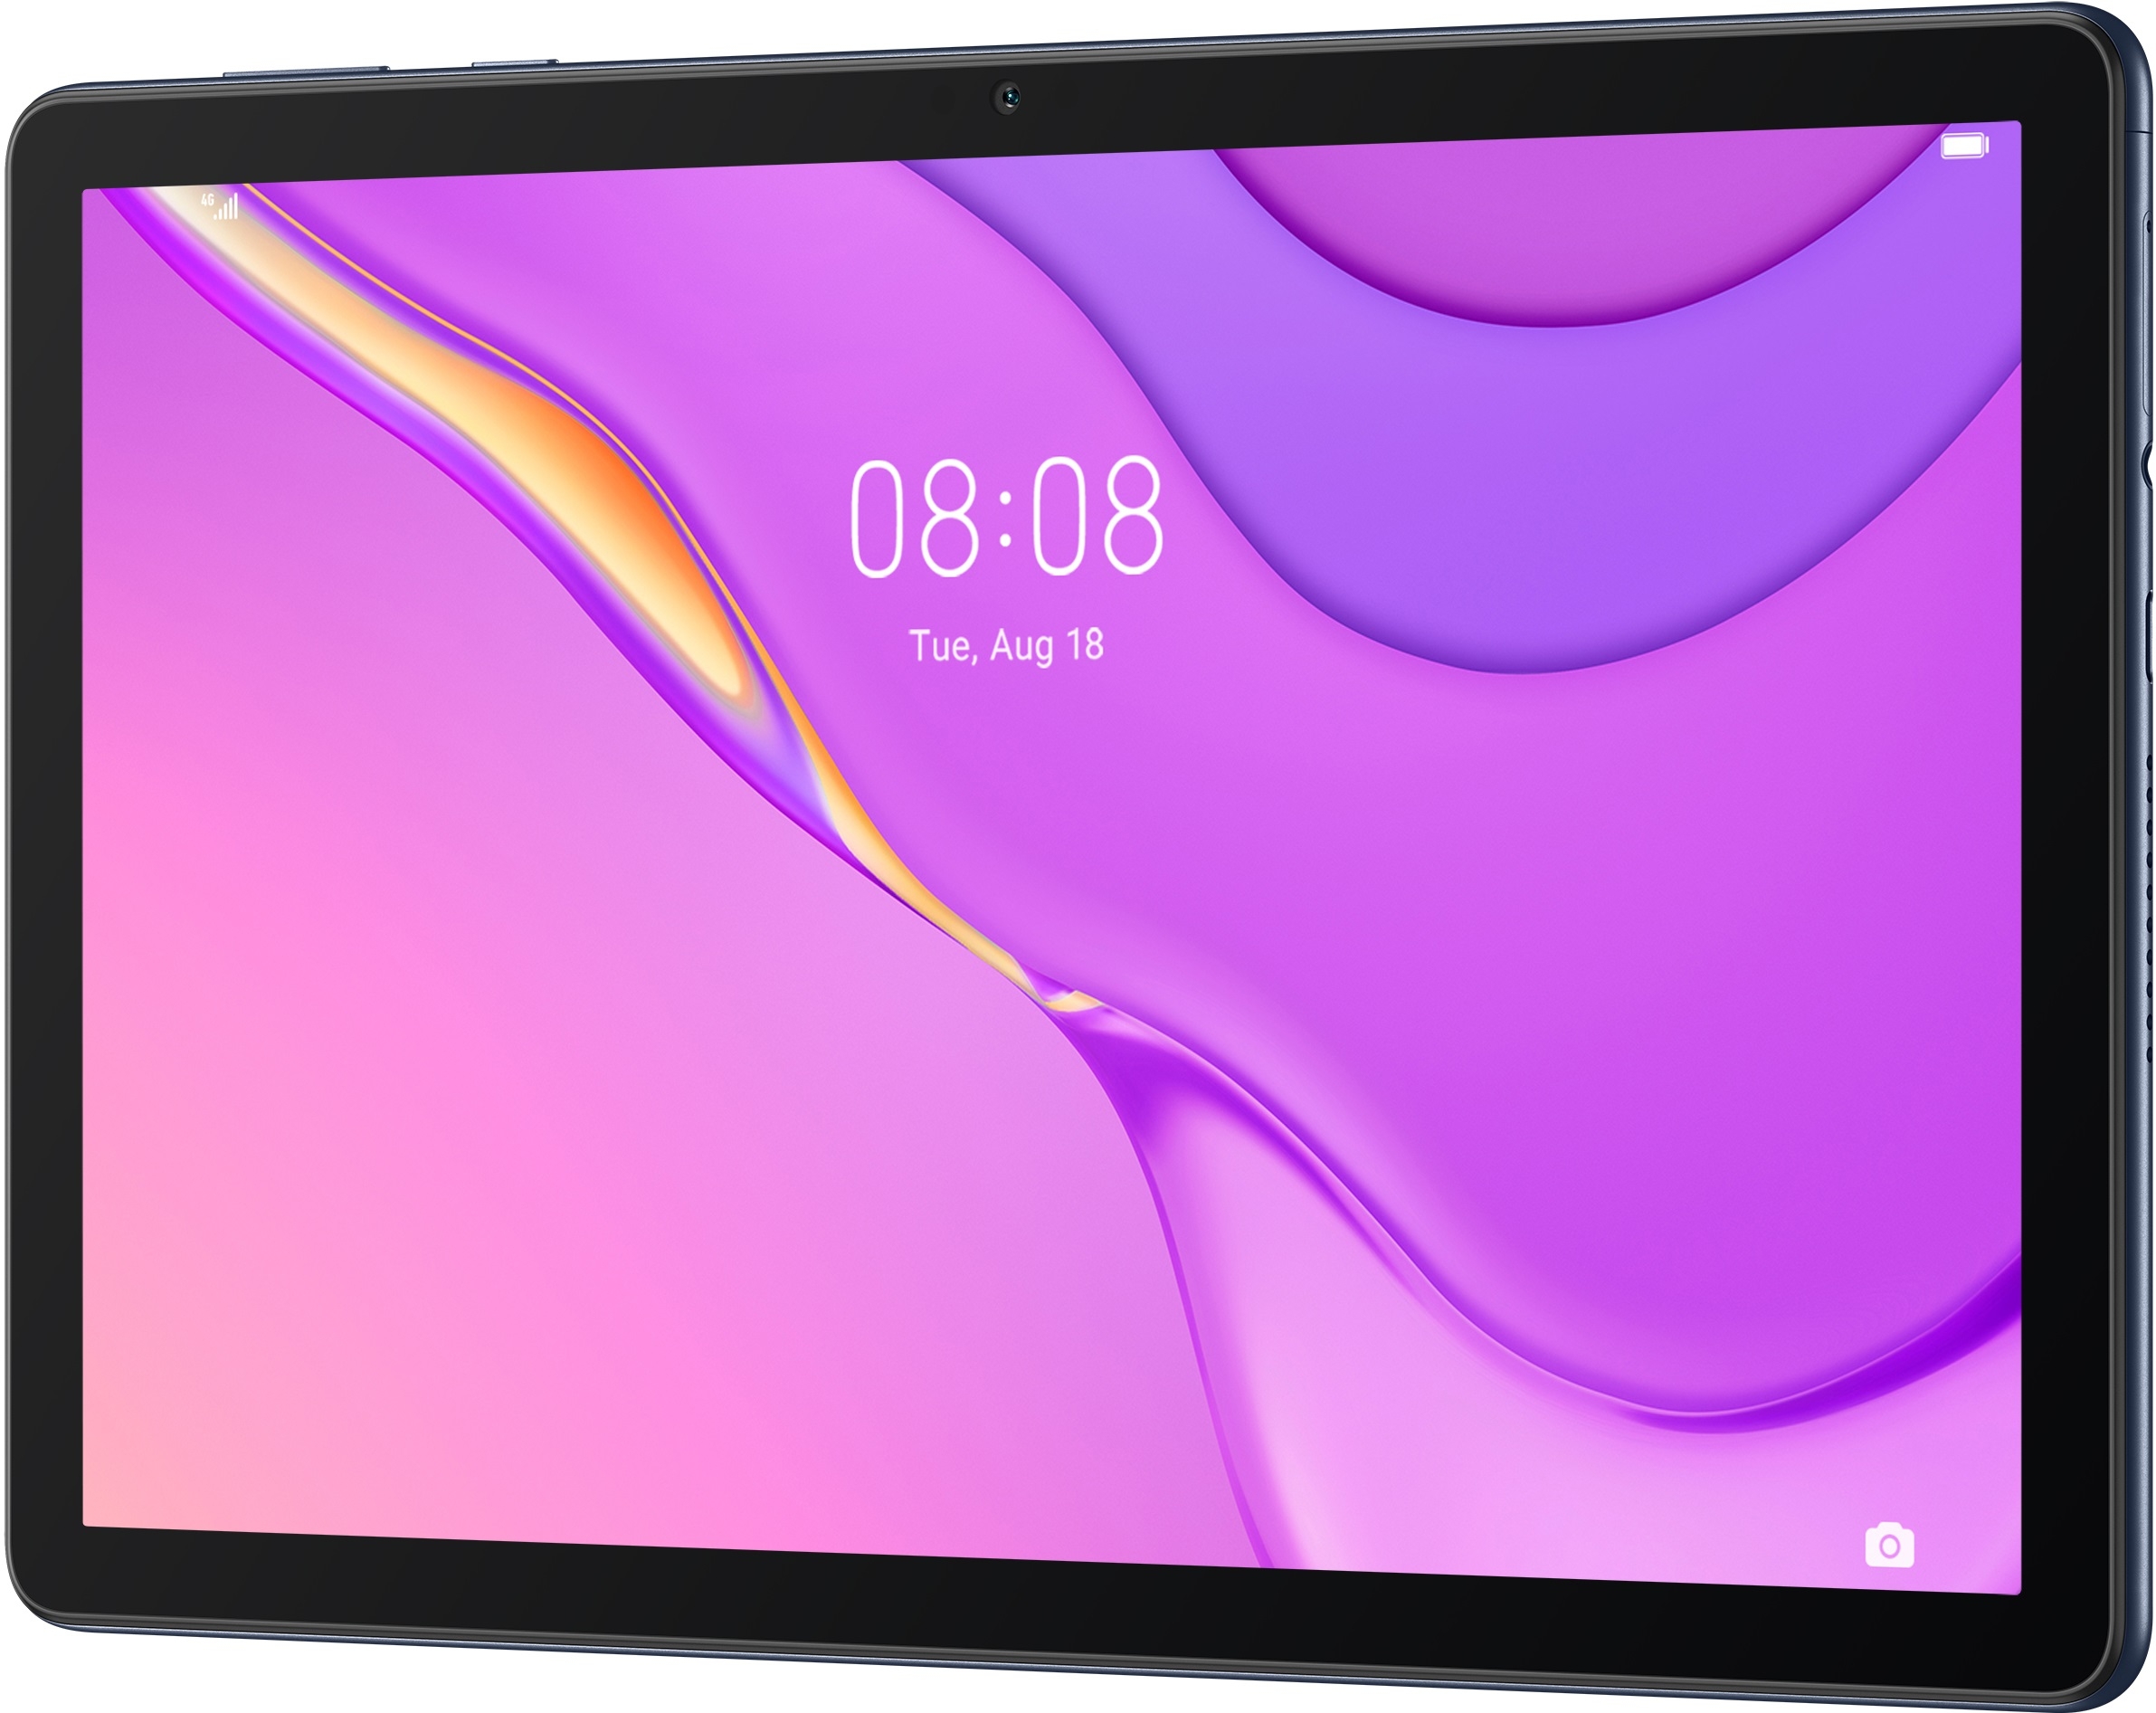 Huawei MatePad T 10s 64Gb LTE (2020)